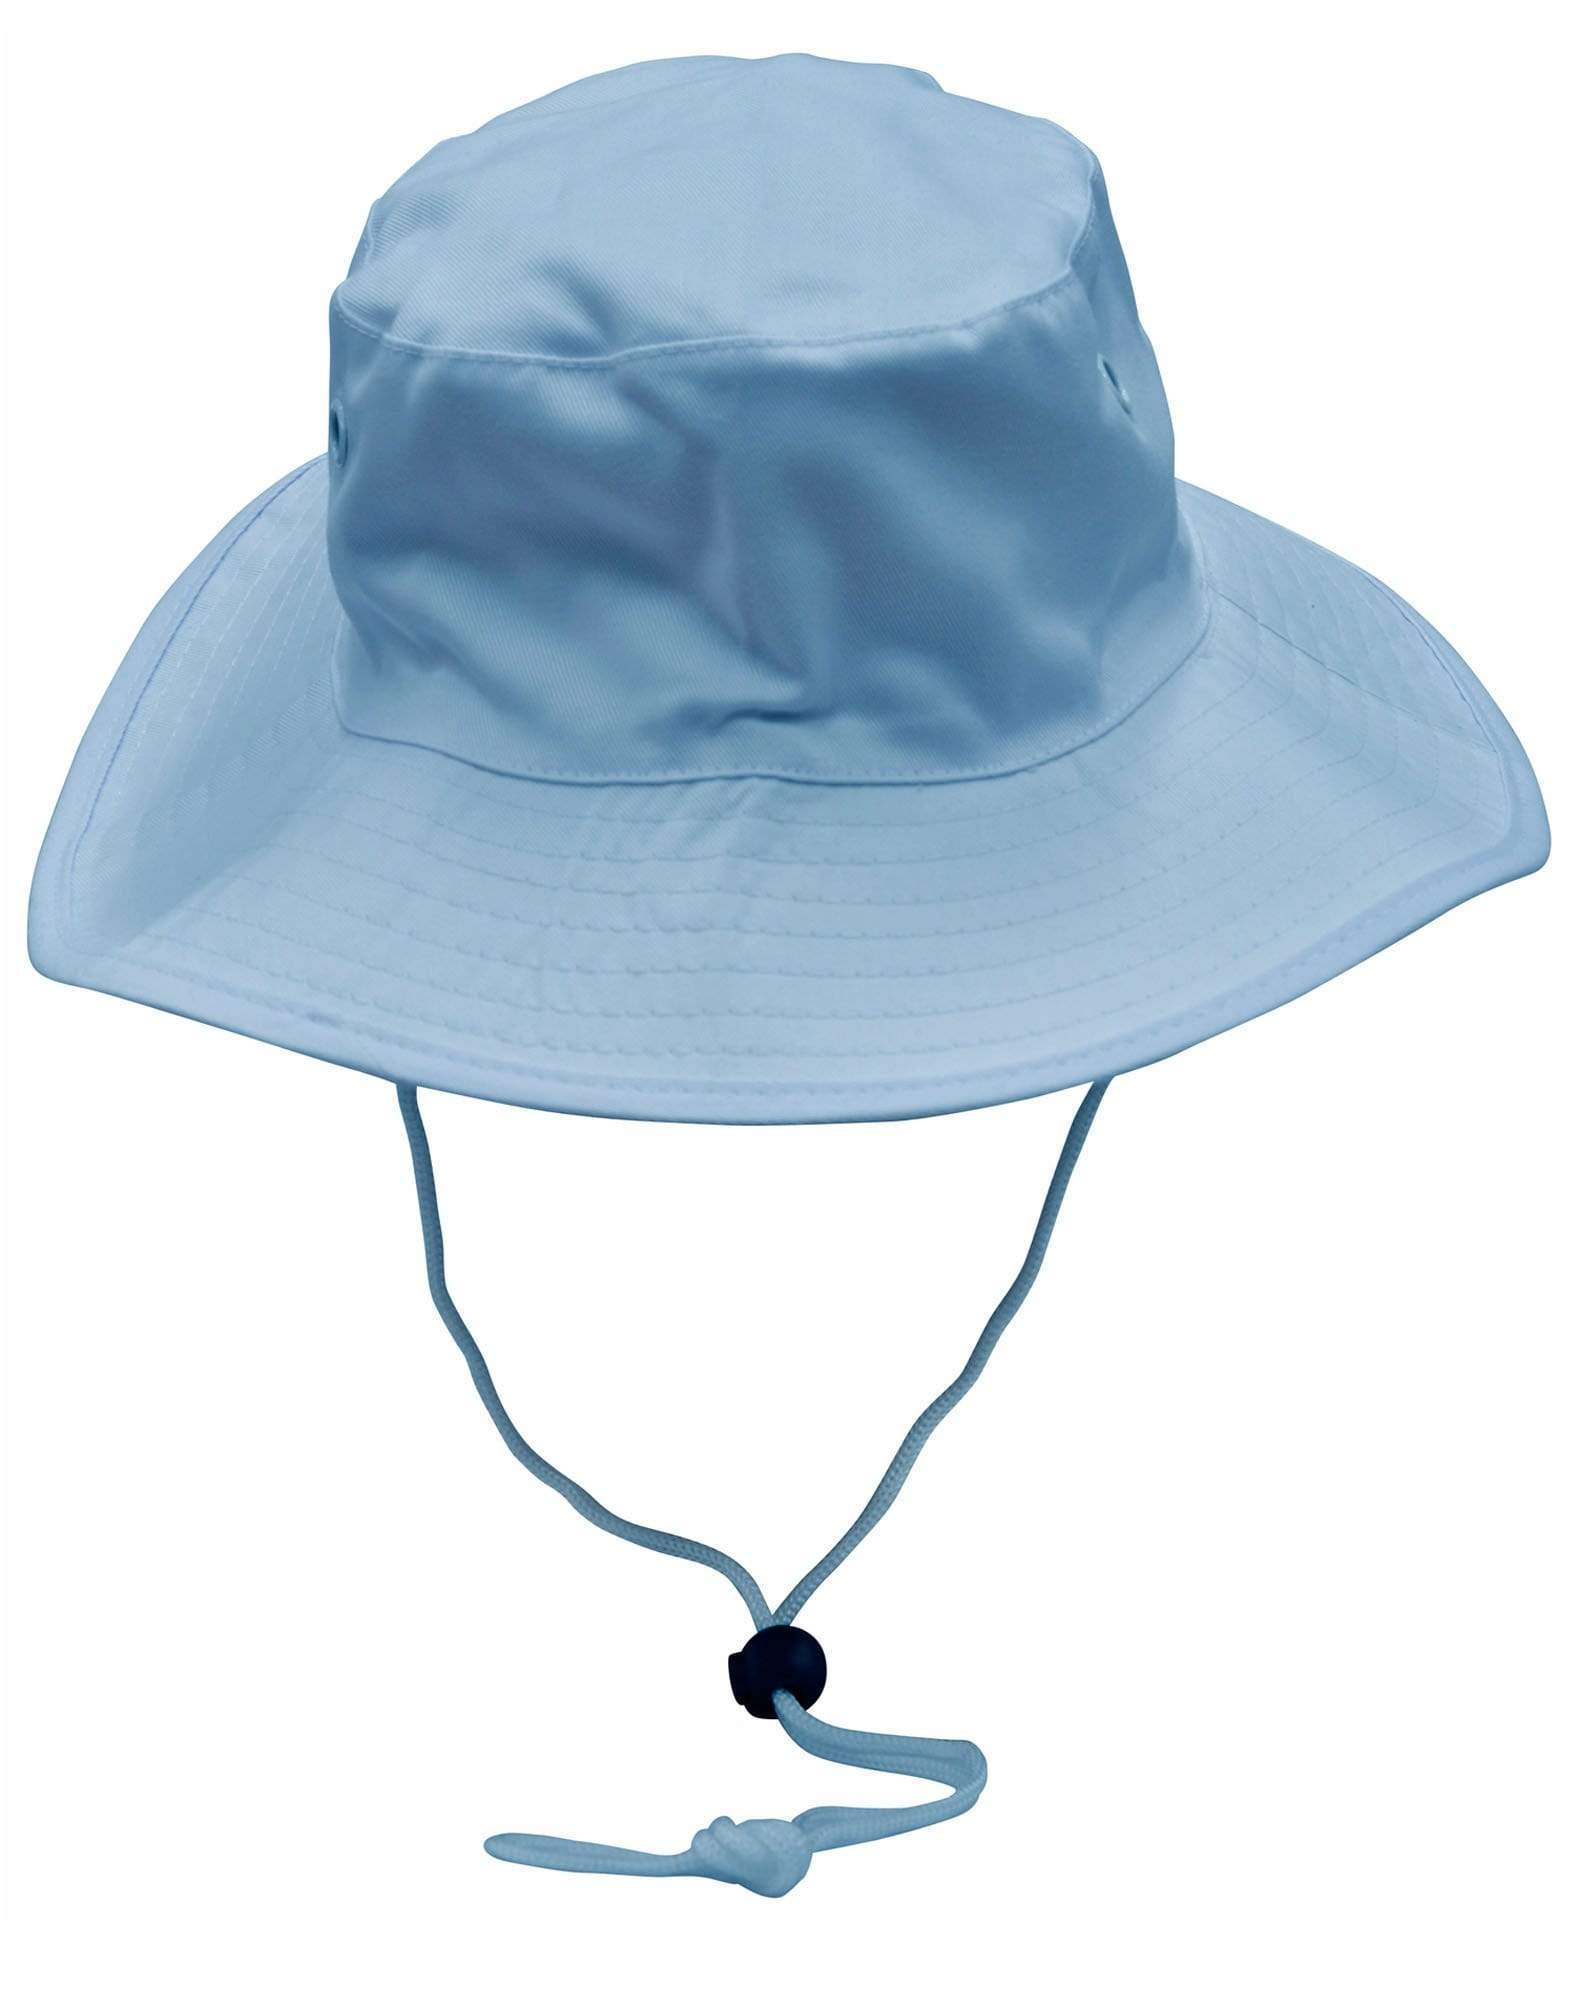 Winning Spirit Active Wear Skyblue / S Surf Hat With Break-away Strap H1035